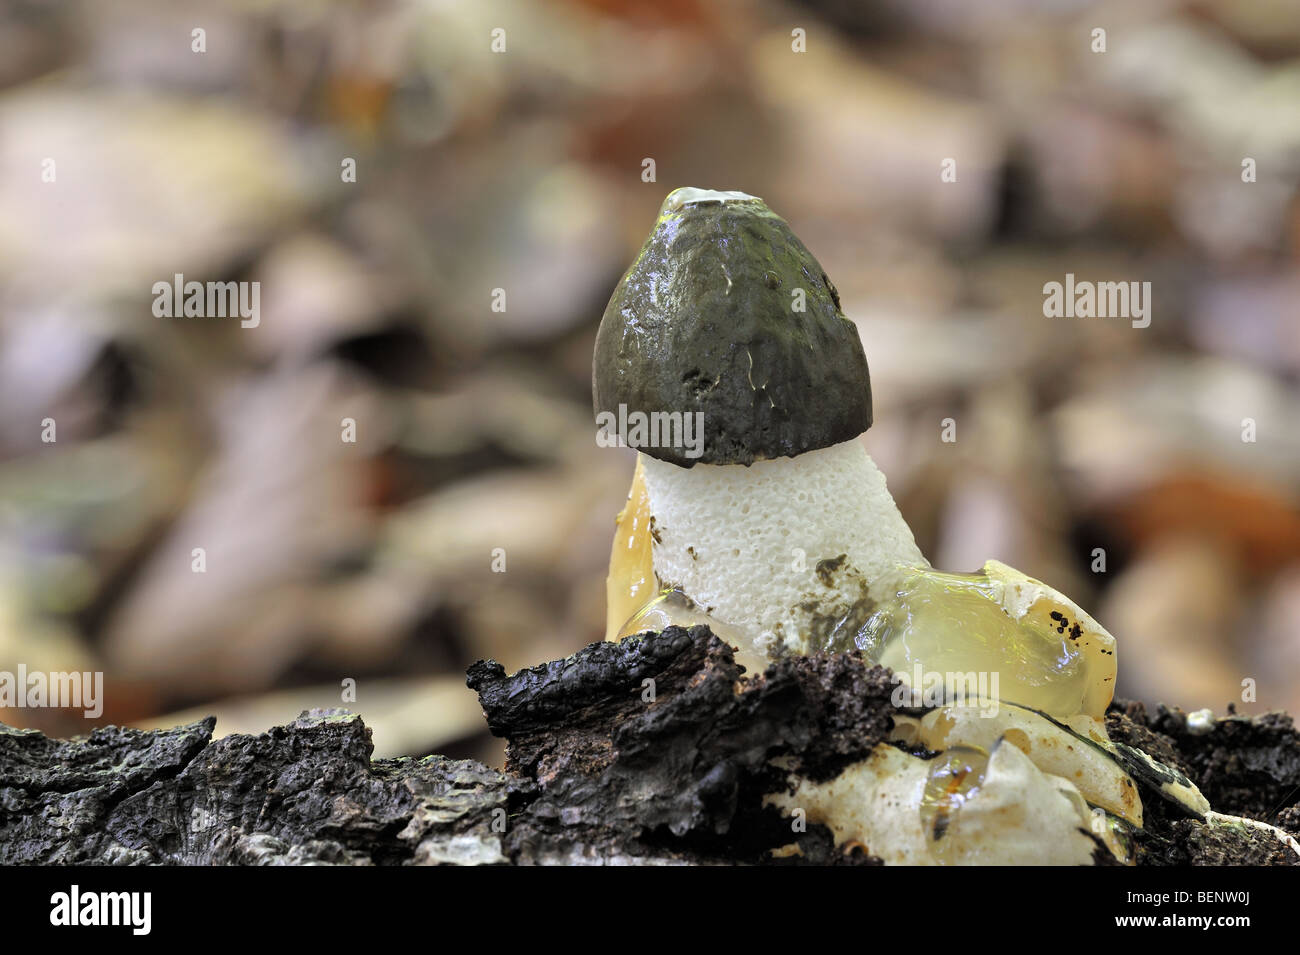 Common stinkhorn / dickes-nipes (Phallus impudicus) emerging in autumn forest Stock Photo